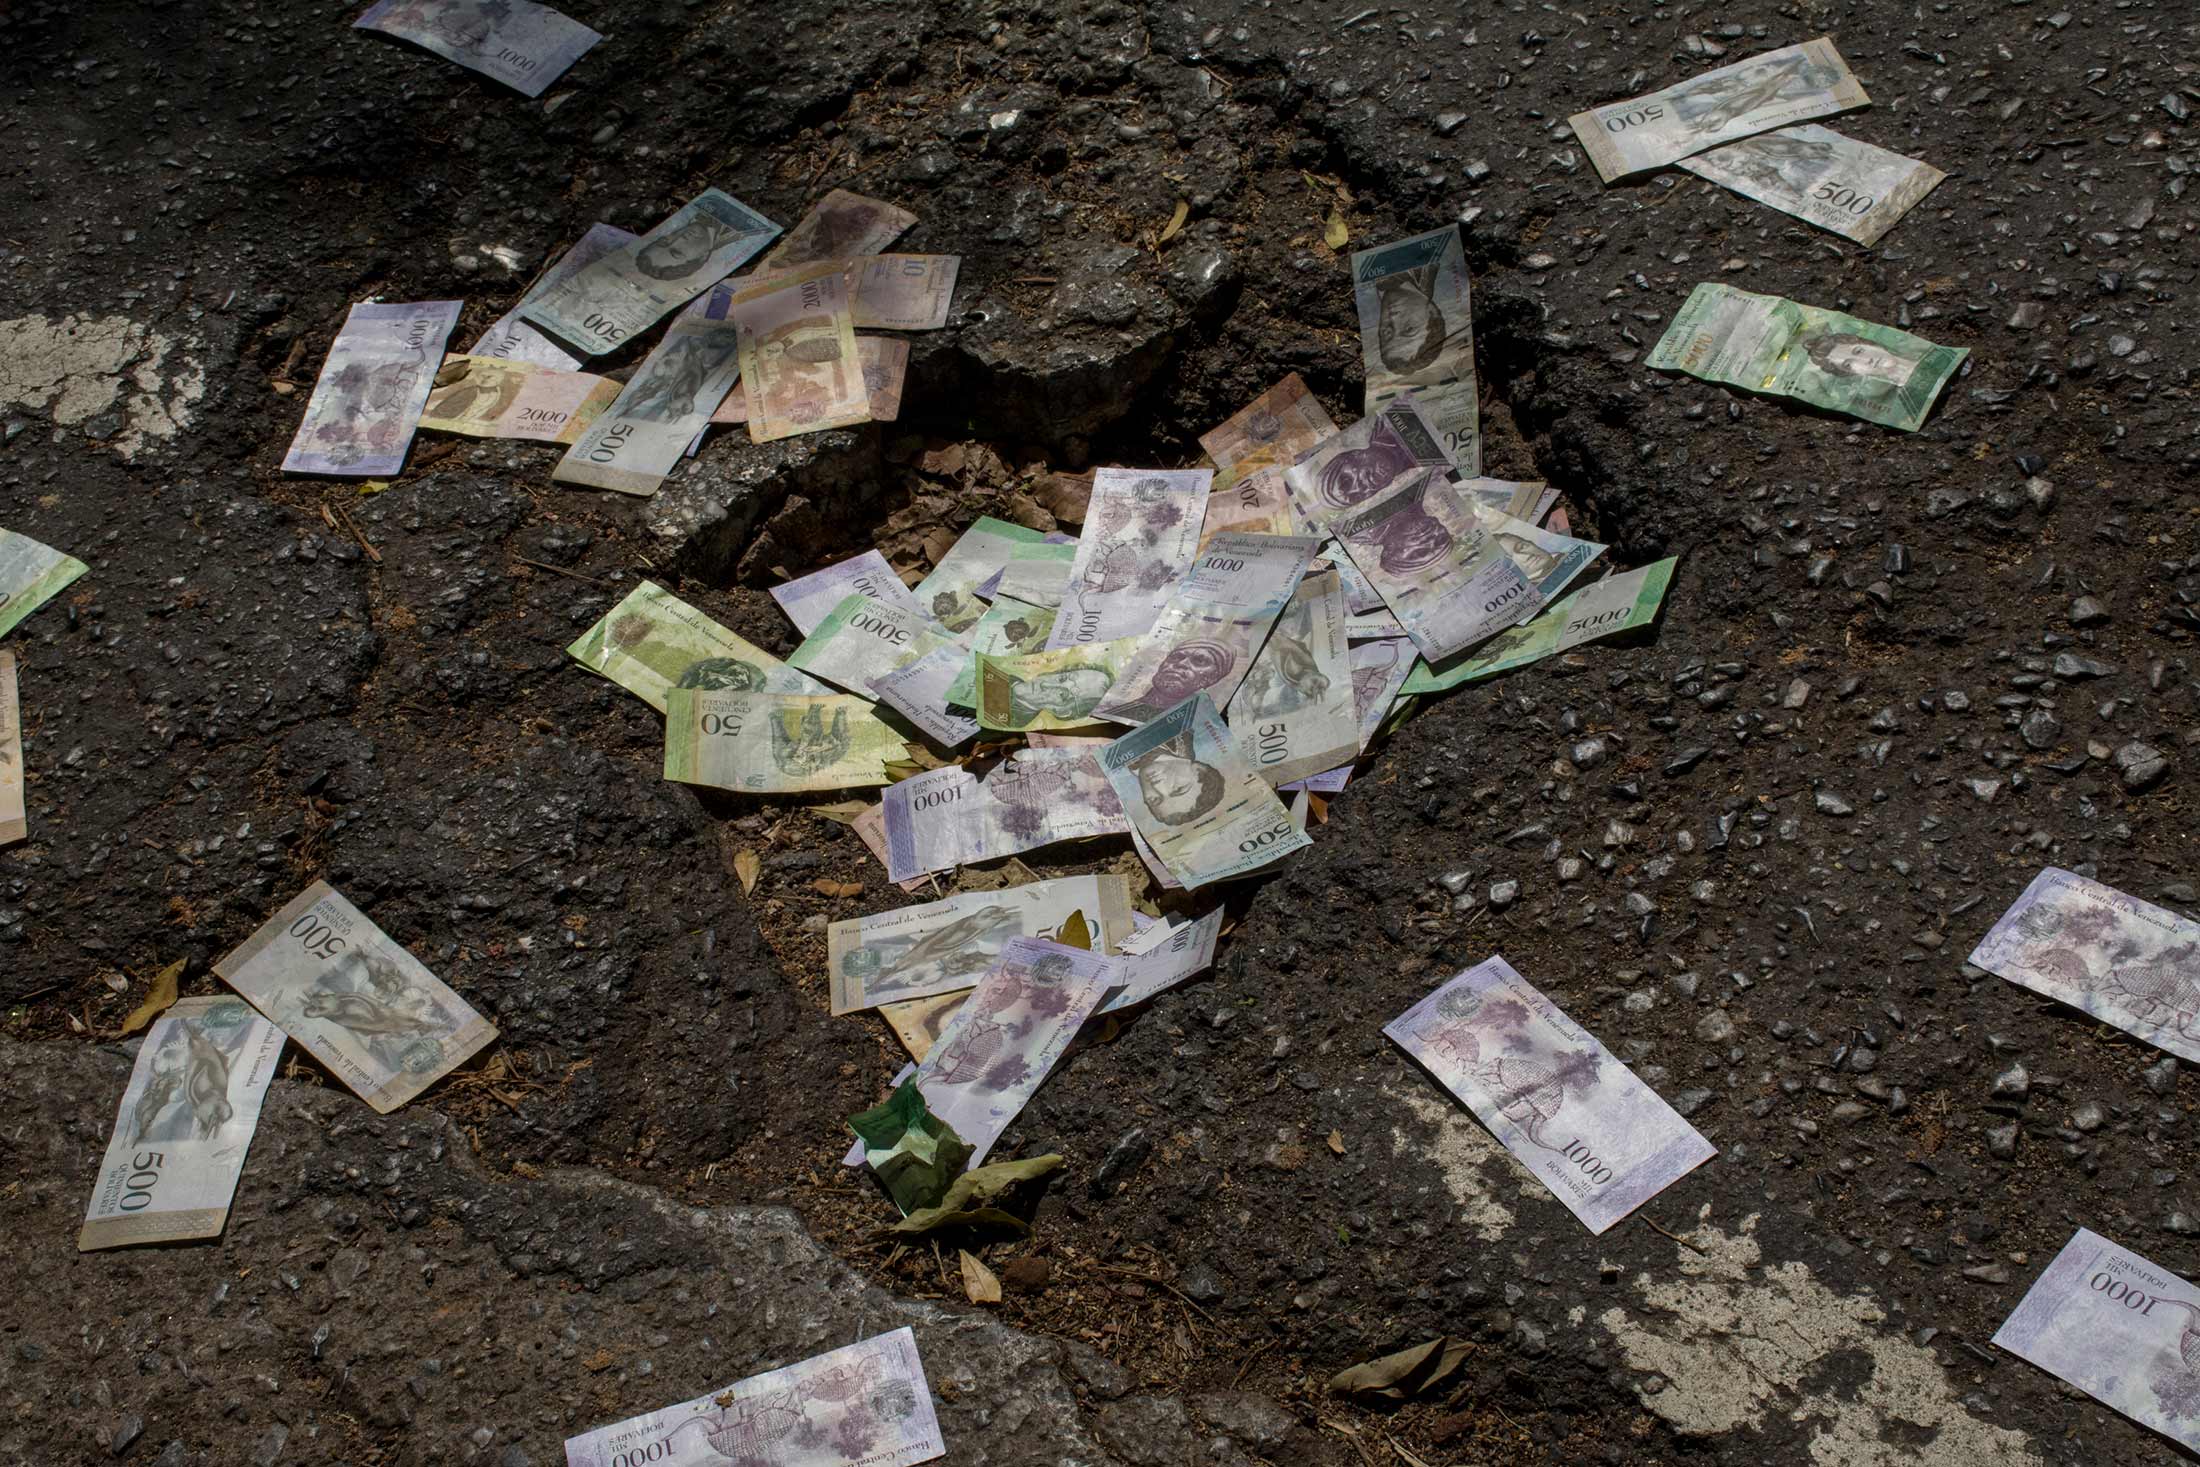 Venezuela: Currency crisis brings economy to standstill | International Bar Association